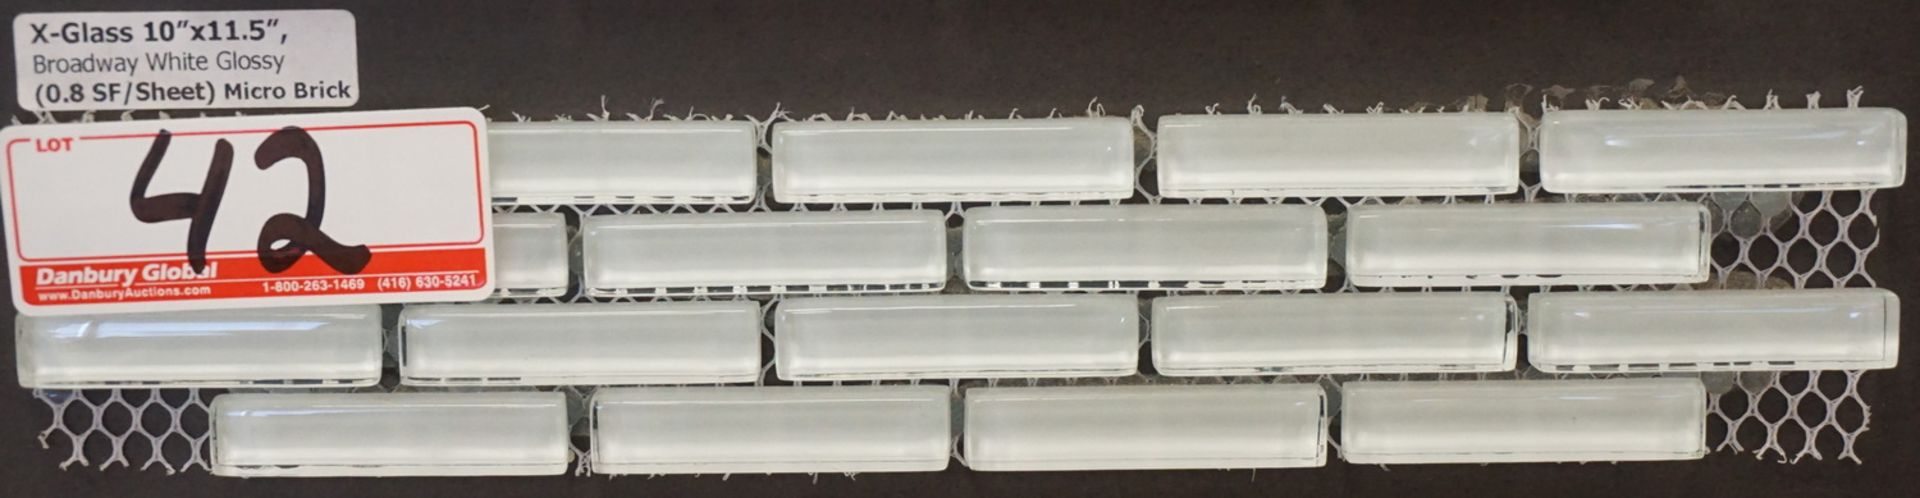 BOXES - BROADWAY GLOSSY WHITE MICRO BRICK 10X11.5 X-GLASS (8.8 SQFT/BOX) (8B15)